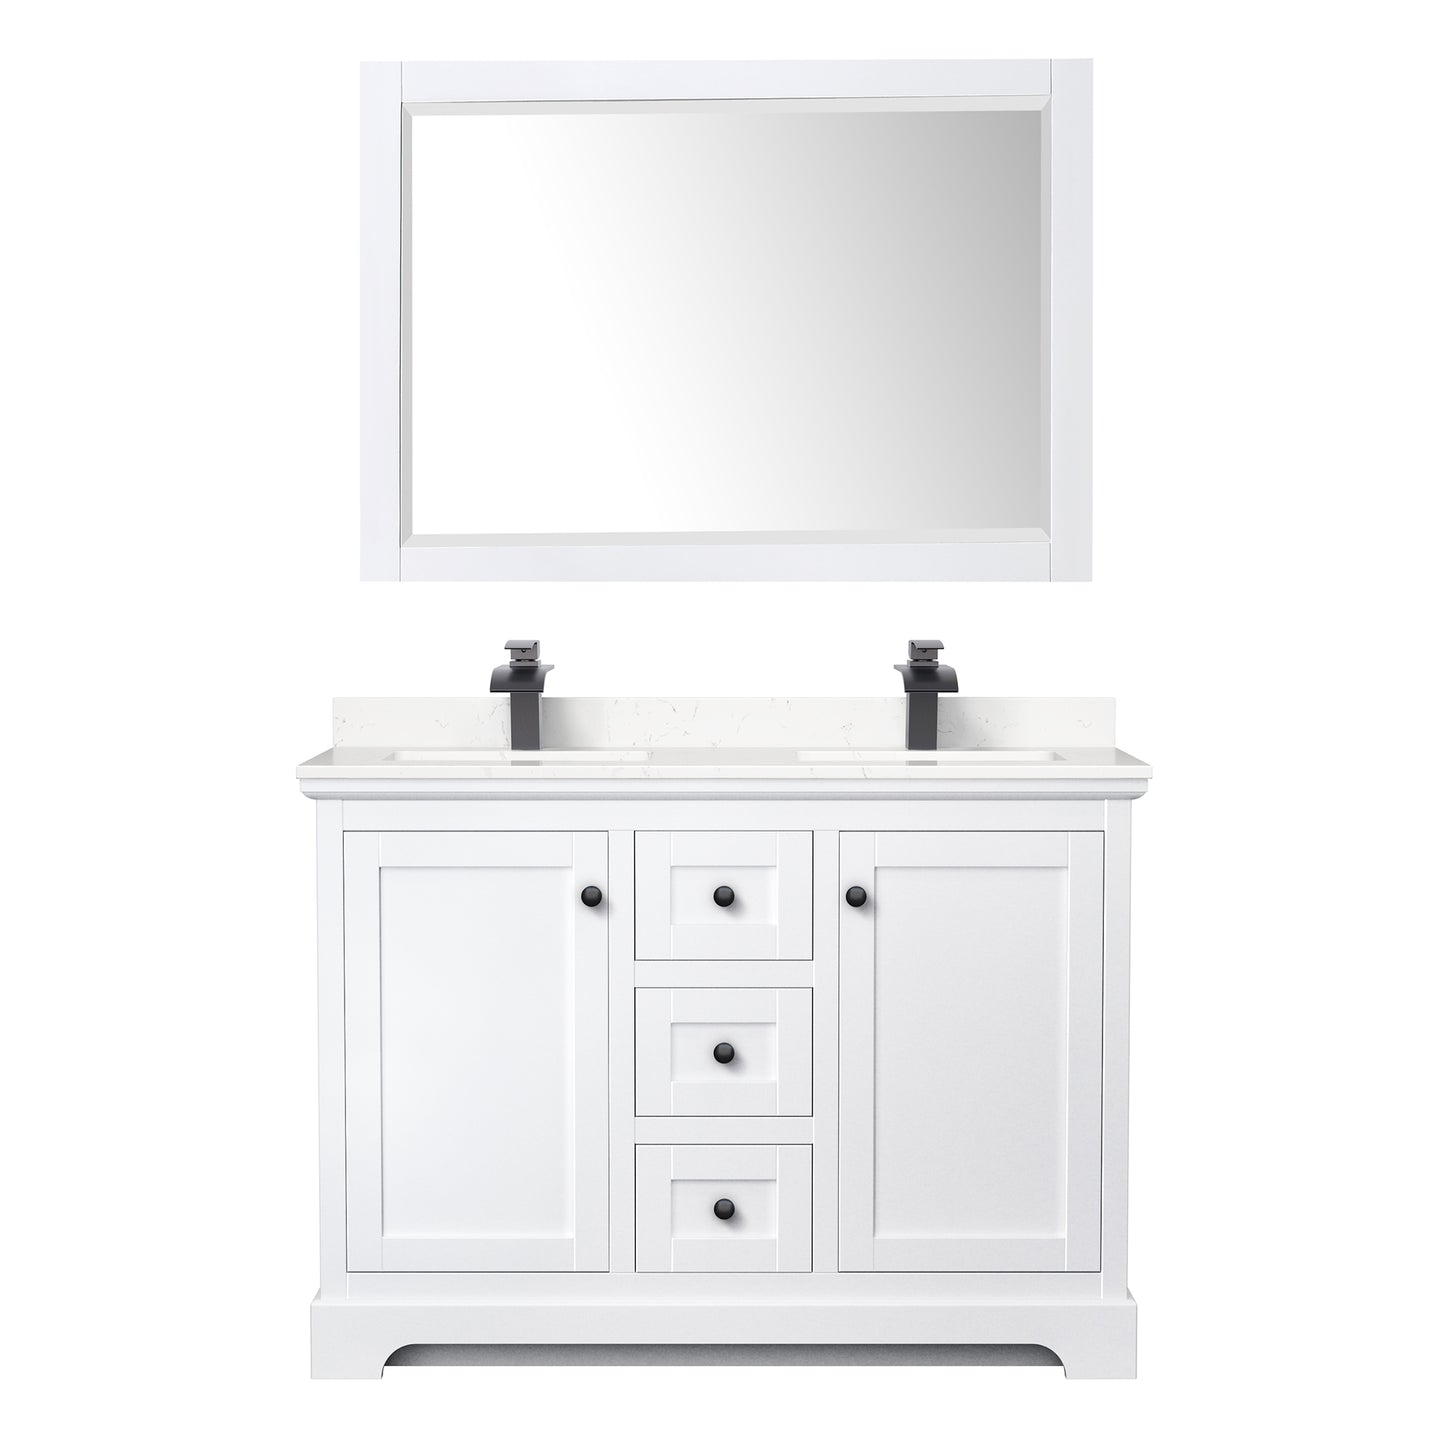 Wyndham Avery 48 Inch Double Bathroom Vanity Light-Vein Carrara Cultured Marble Countertop, Undermount Square Sinks in Matte Black Trim with 46 Inch Mirror - Luxe Bathroom Vanities